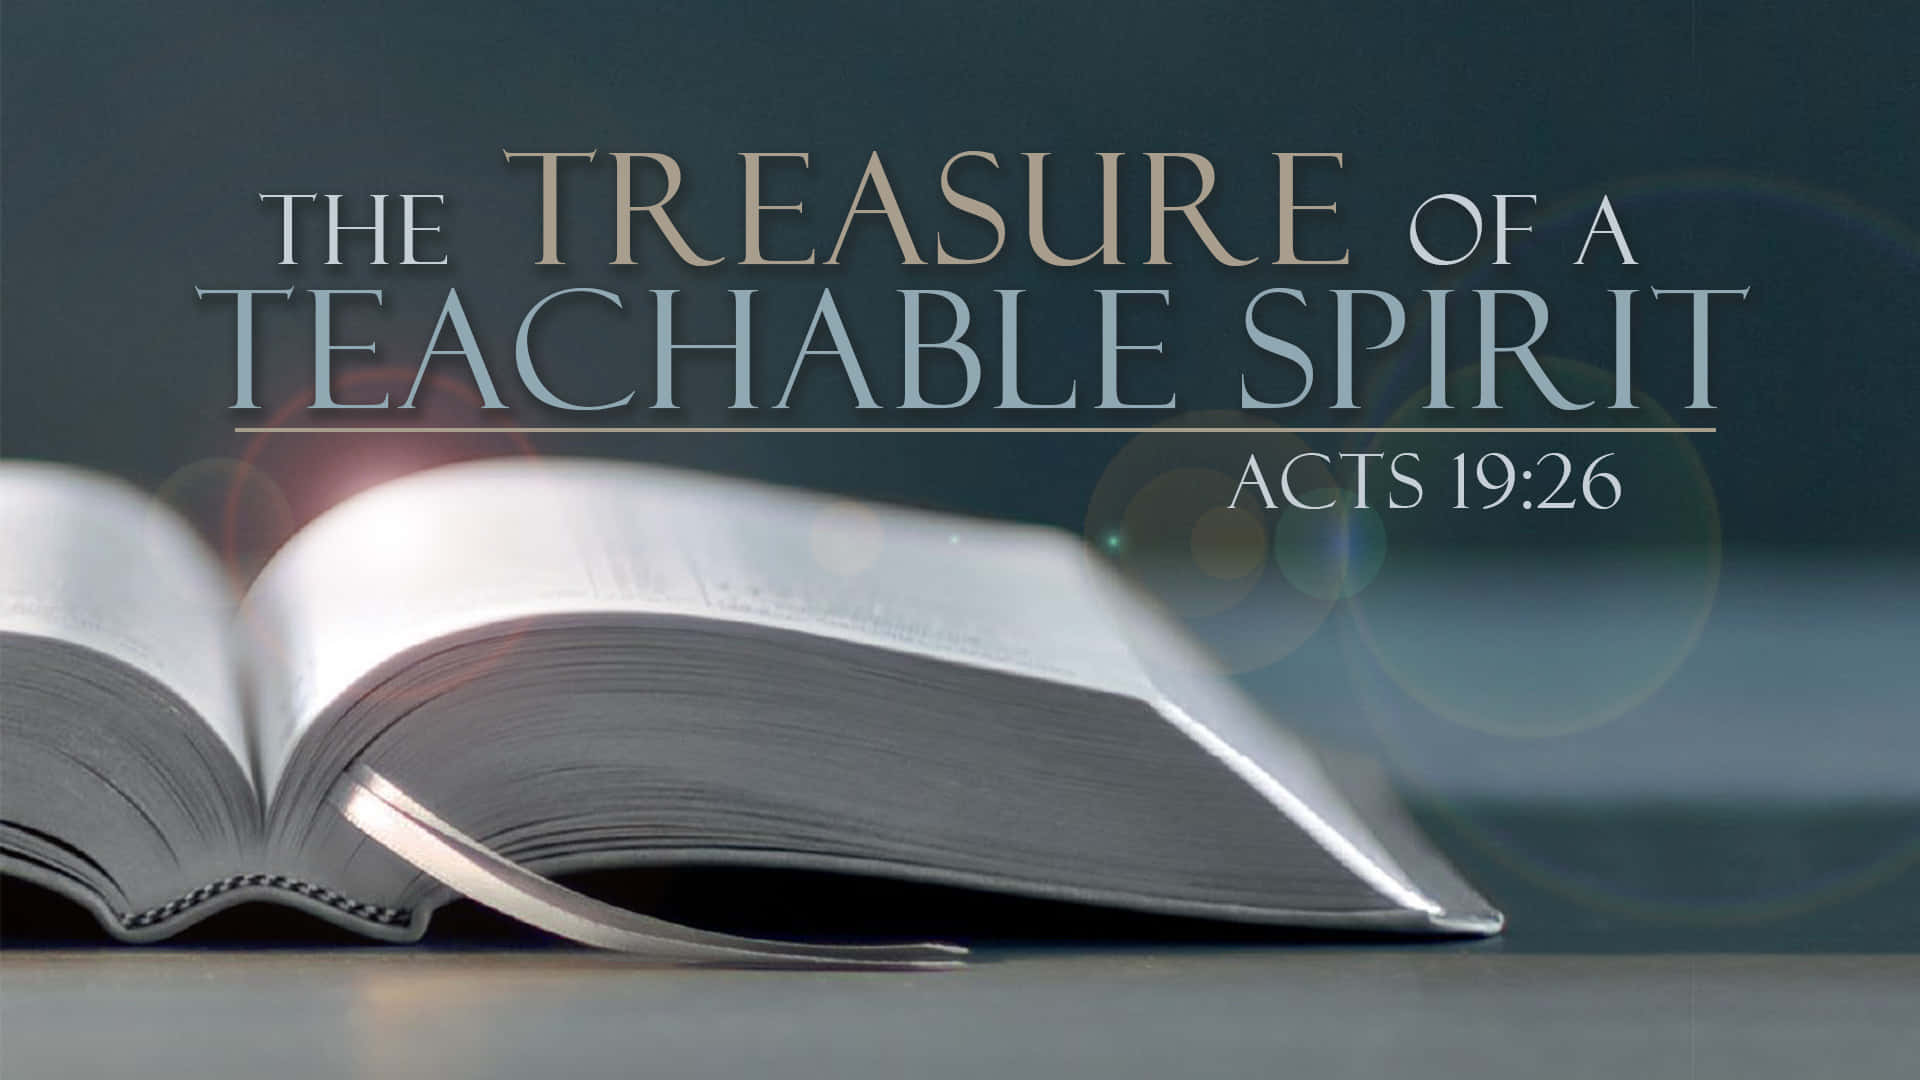 Treasureof Teachable Spirit Book Wallpaper